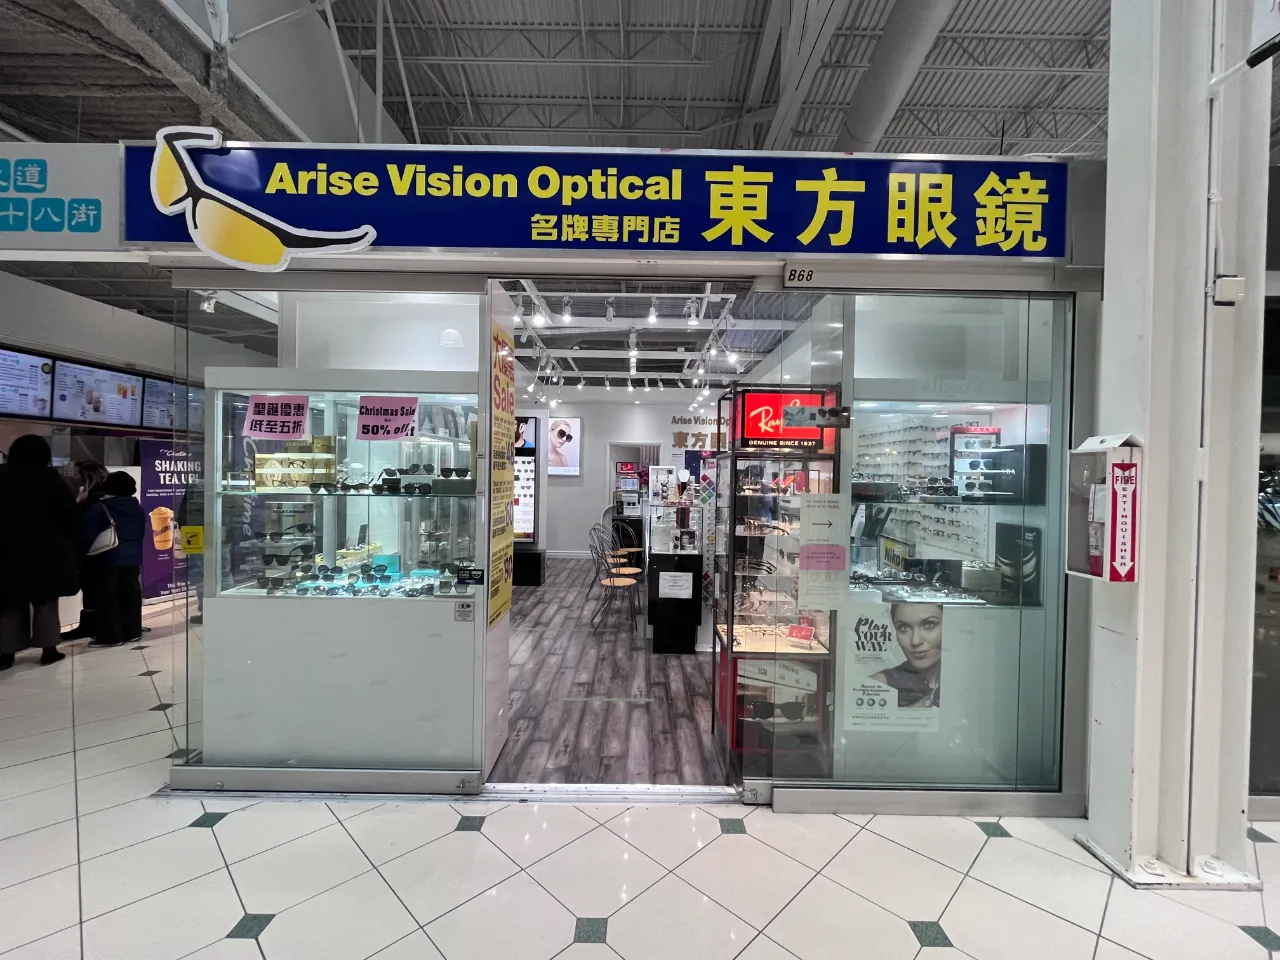 Arise Vision Optical